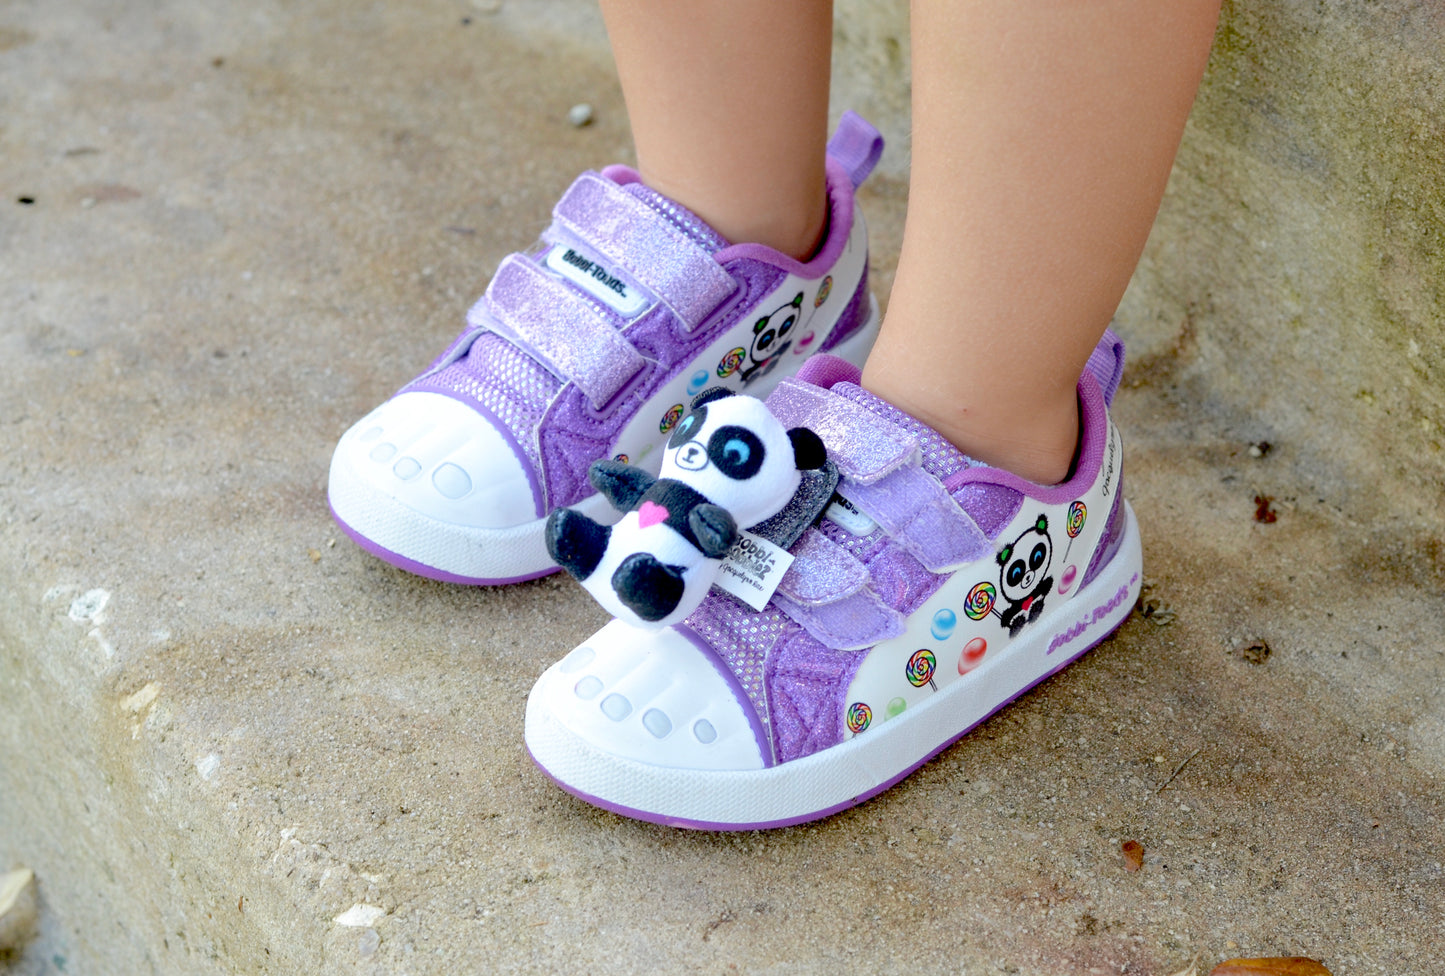 Pollipop Zapatillas Infantiles con Luces LED marca Bobbi-Toads